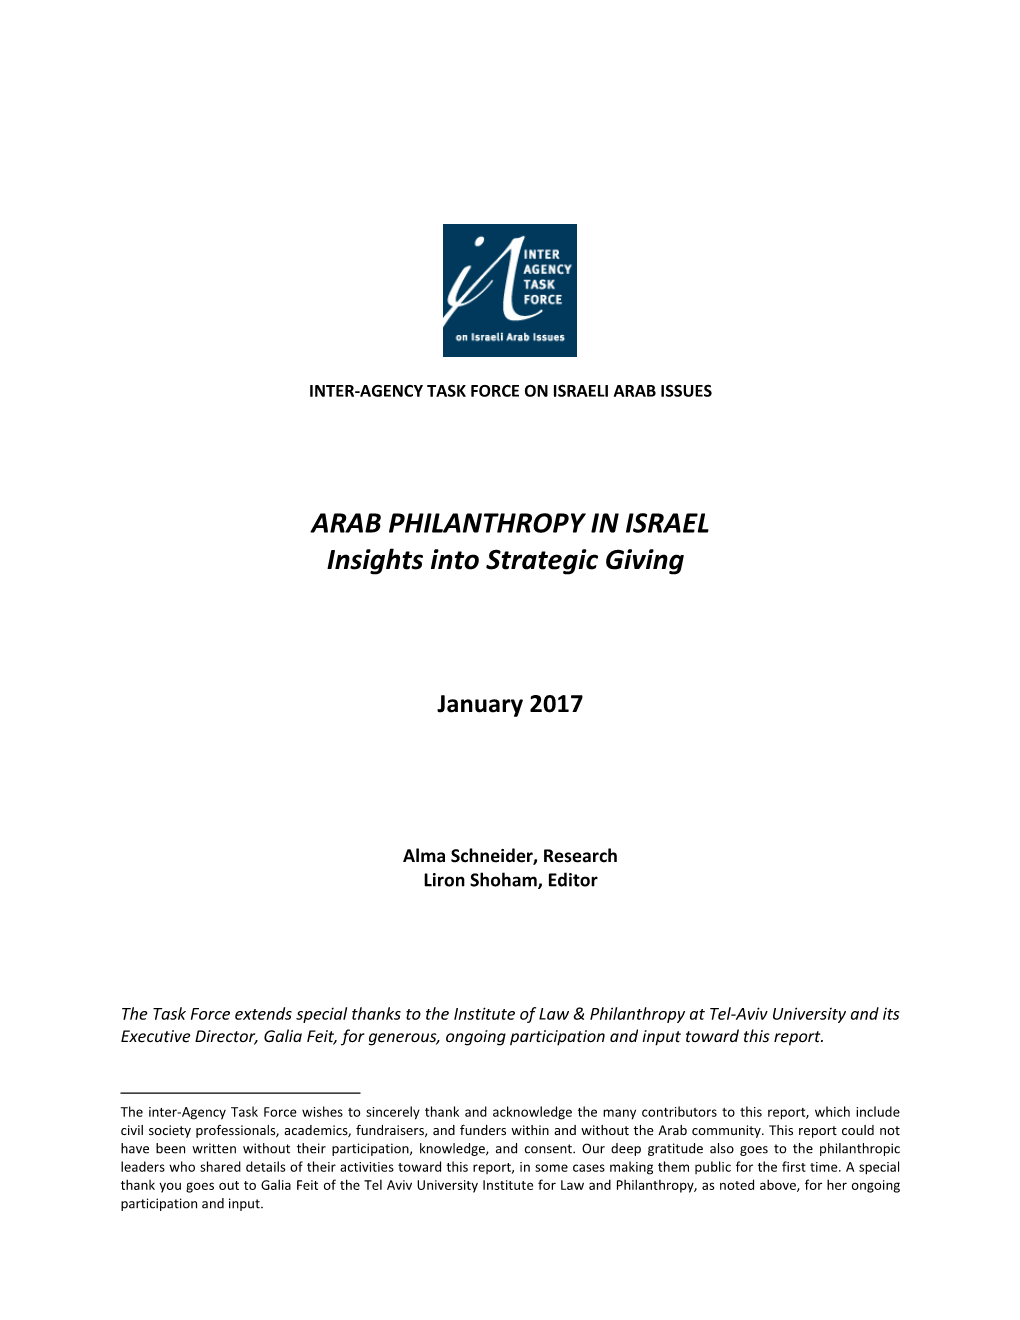 ARAB PHILANTHROPY in ISRAEL Insights Into Strategic Giving1